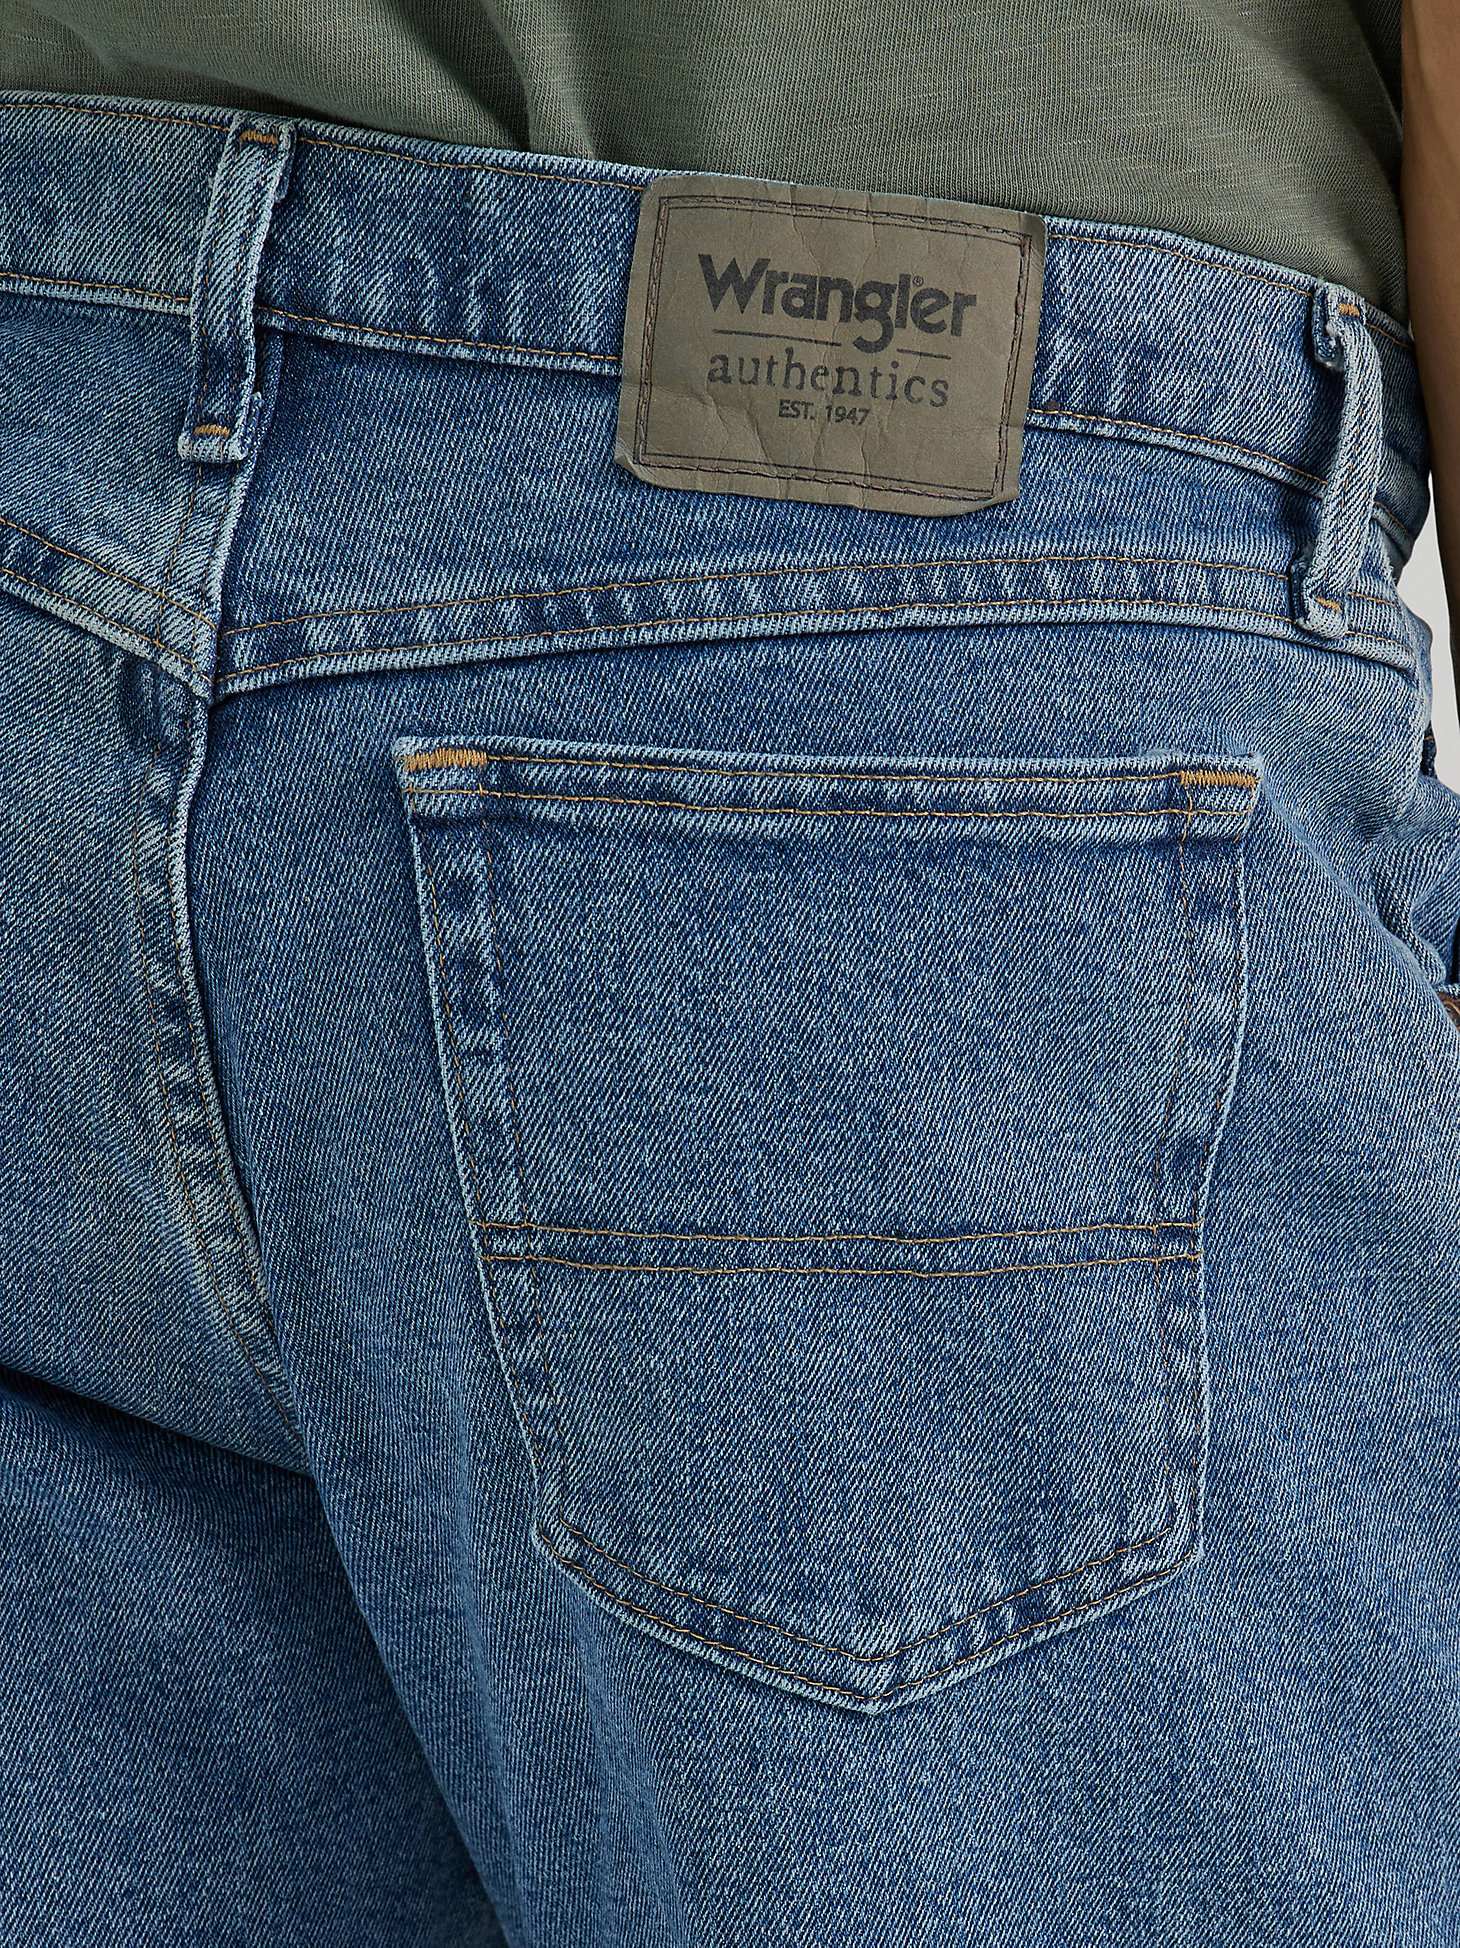 Men's Wrangler Authentics® Relaxed Fit Flex Jean in Vintage Blue alternative view 2